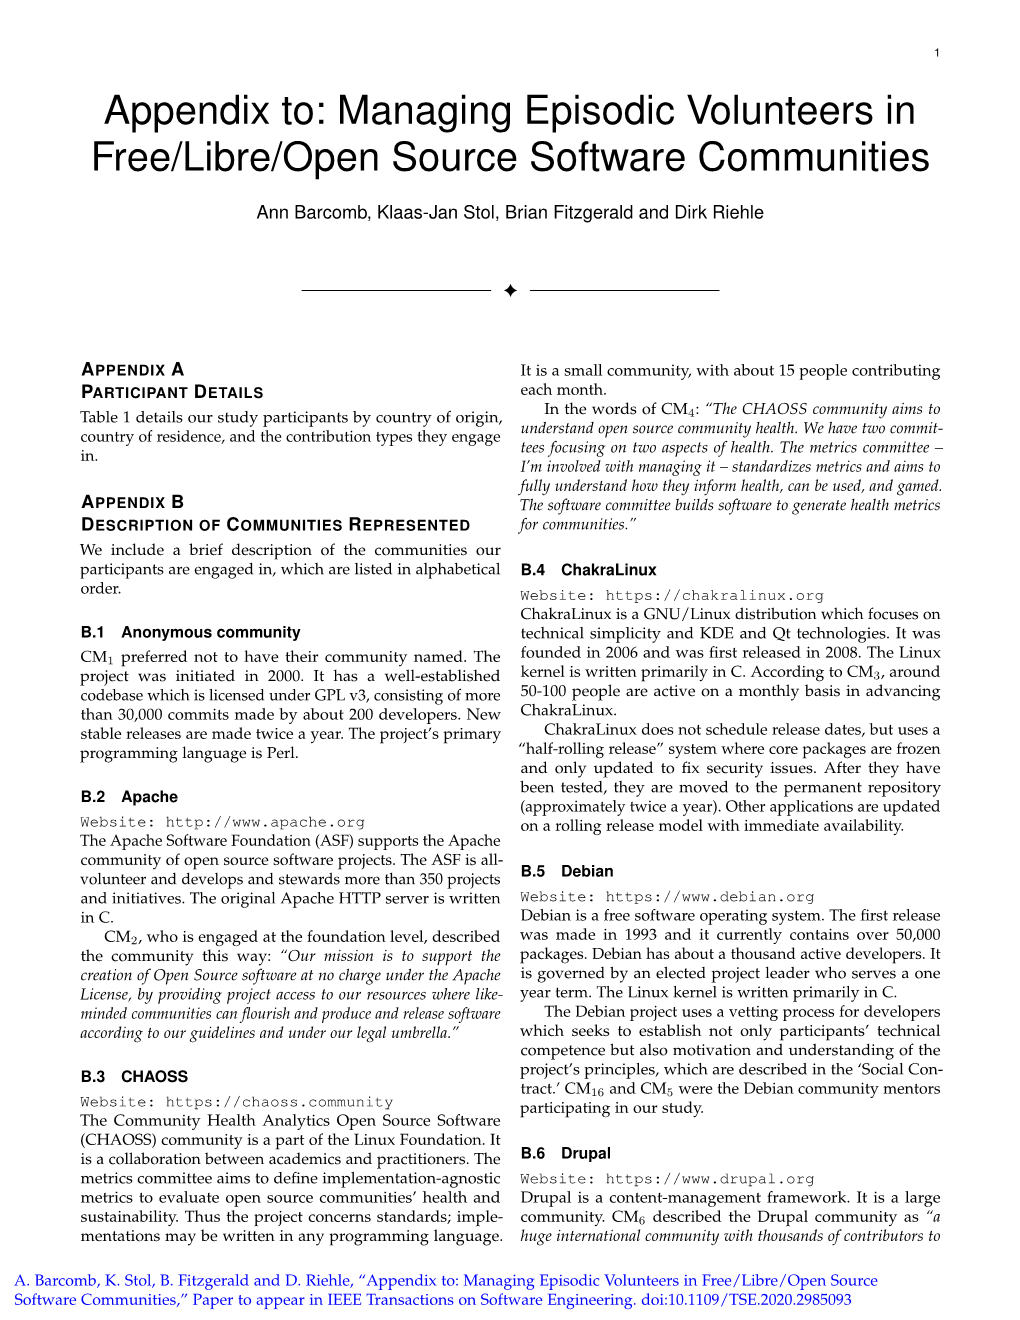 Managing Episodic Volunteers in Free/Libre/Open Source Software Communities